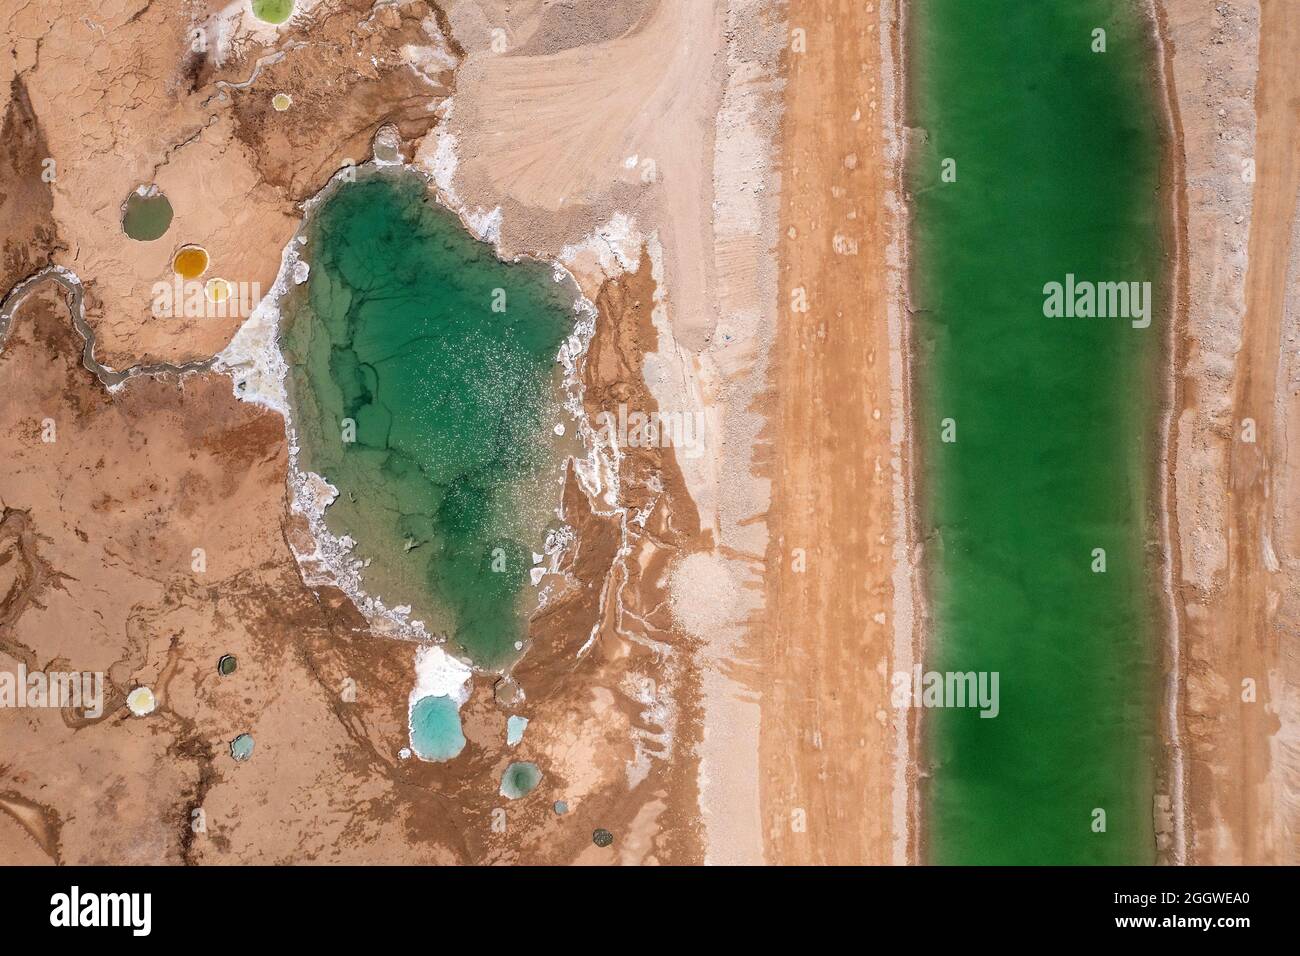 Sinkholes in The Dead Sea coastline, Aerial view. Stock Photo